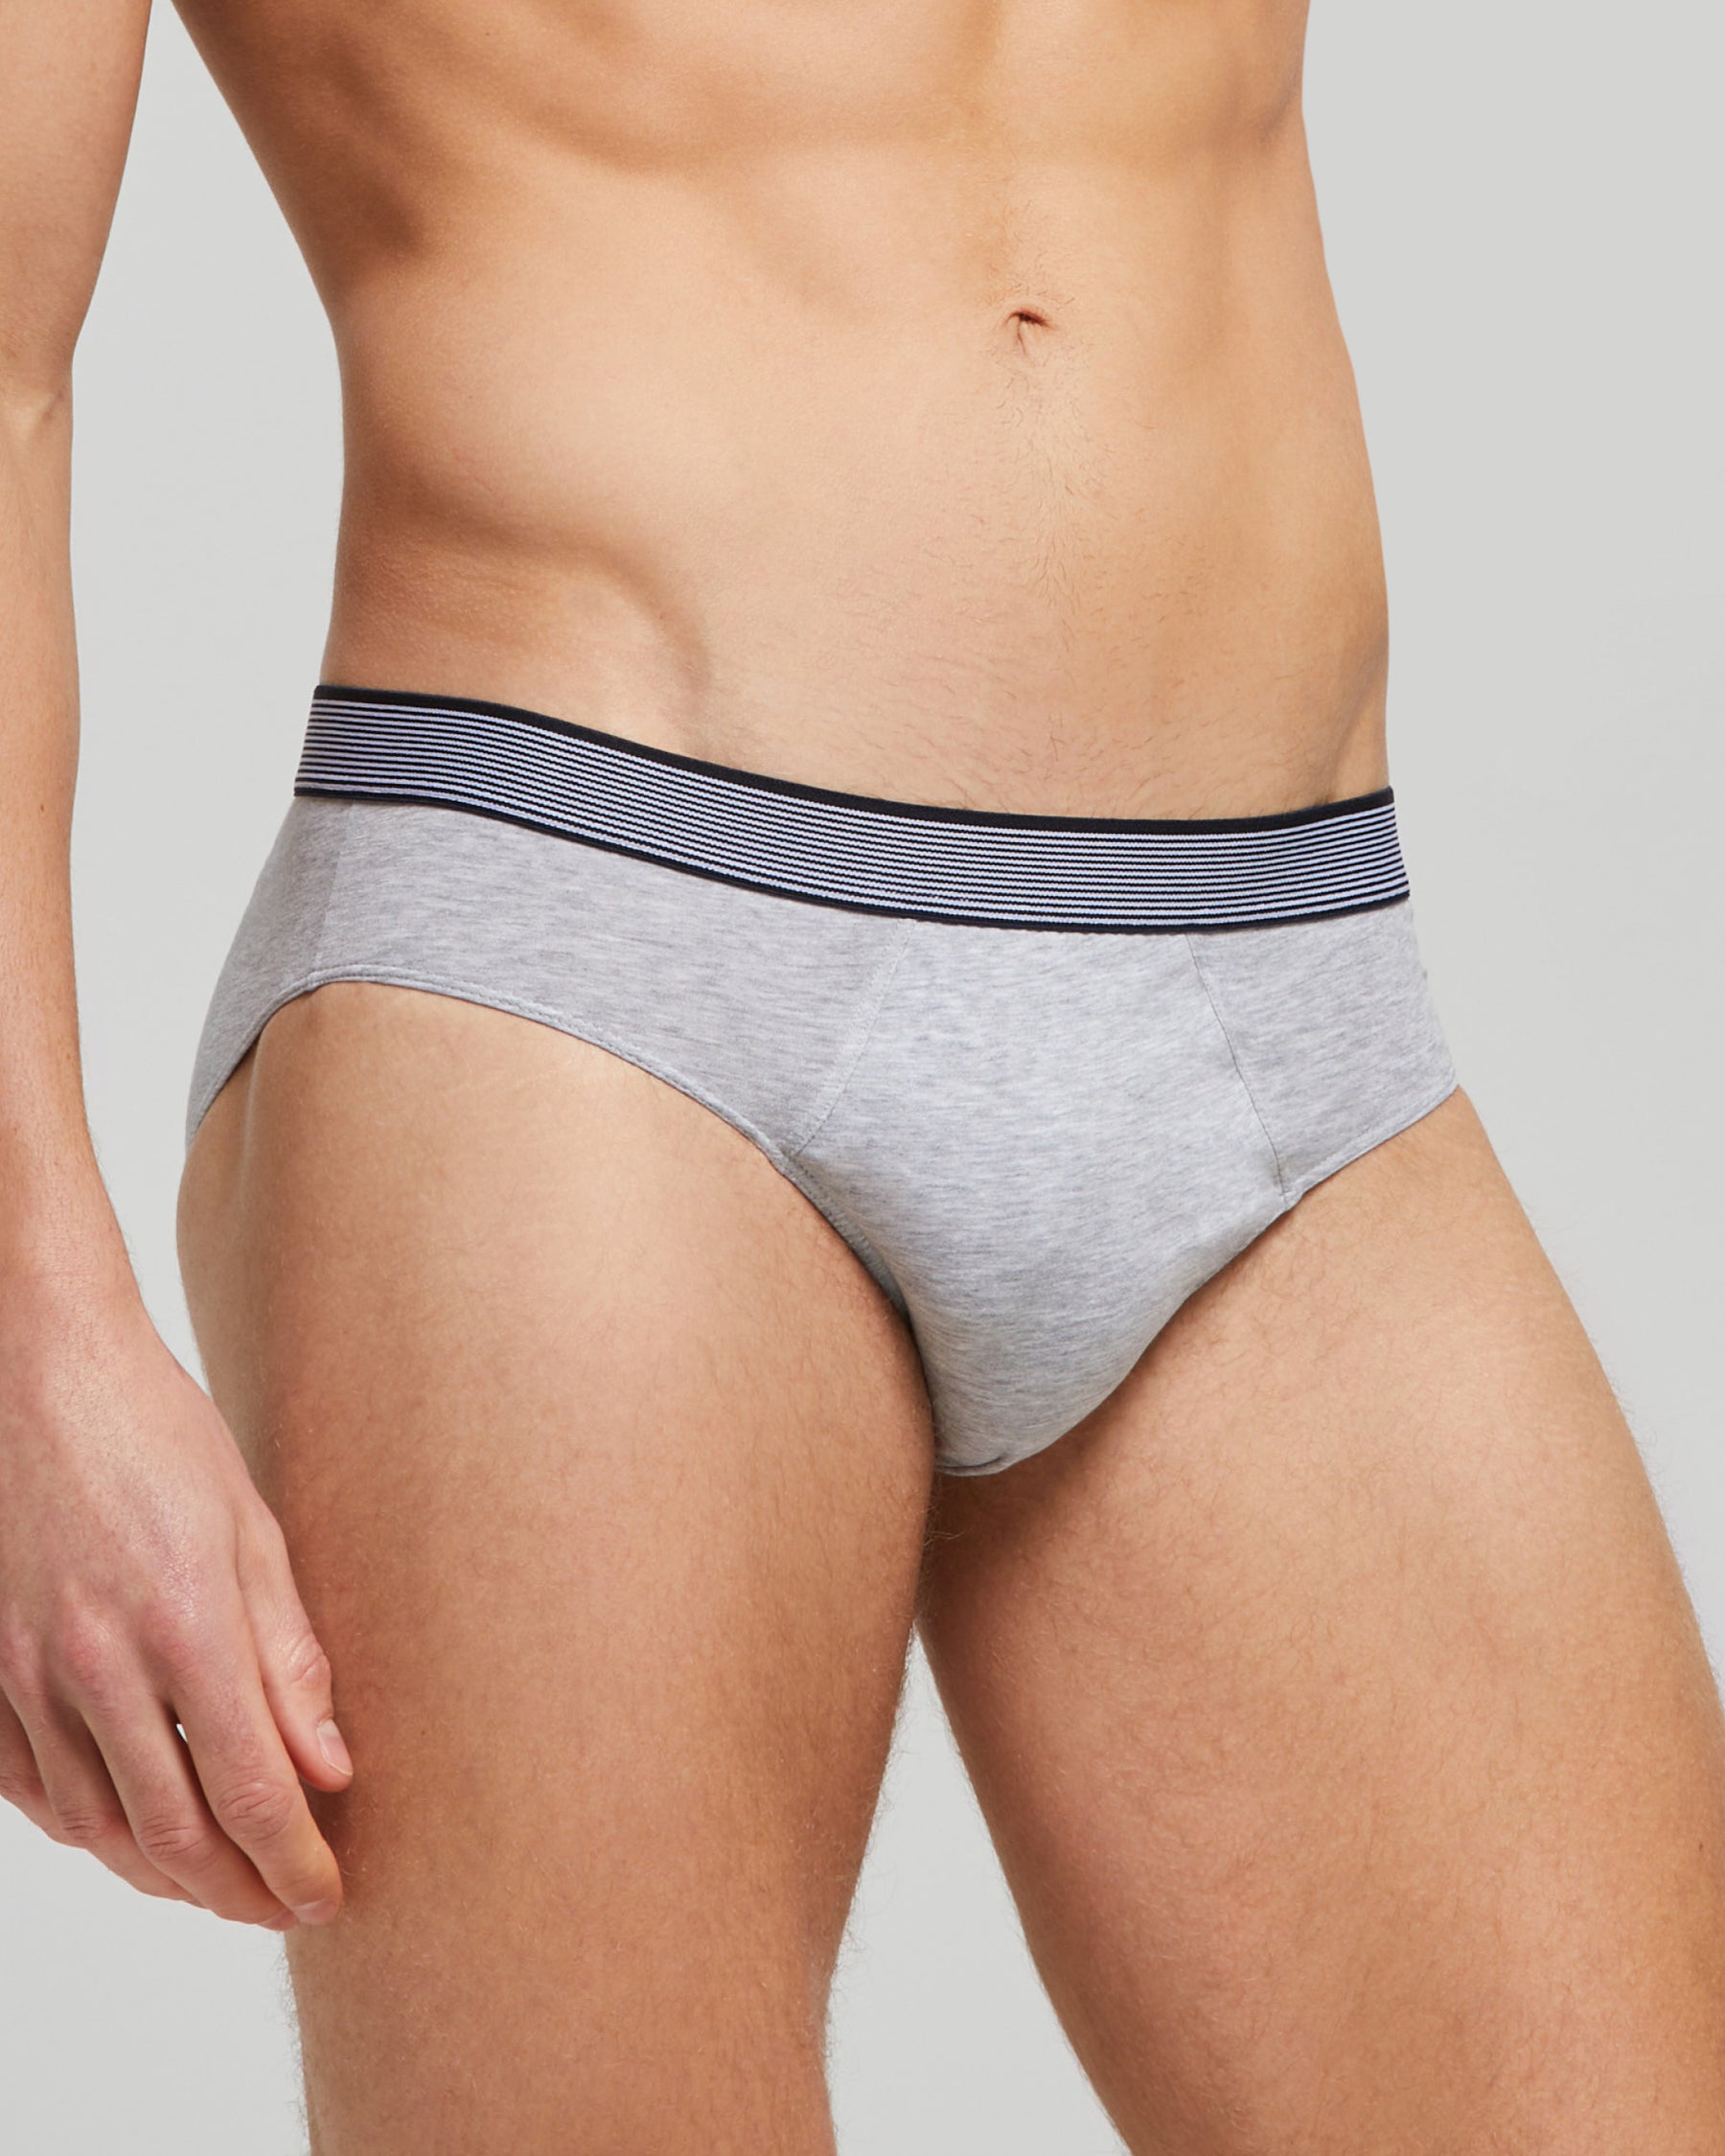 Trunks organic cotton stormy grey - Elegant men's underwear - The Nines